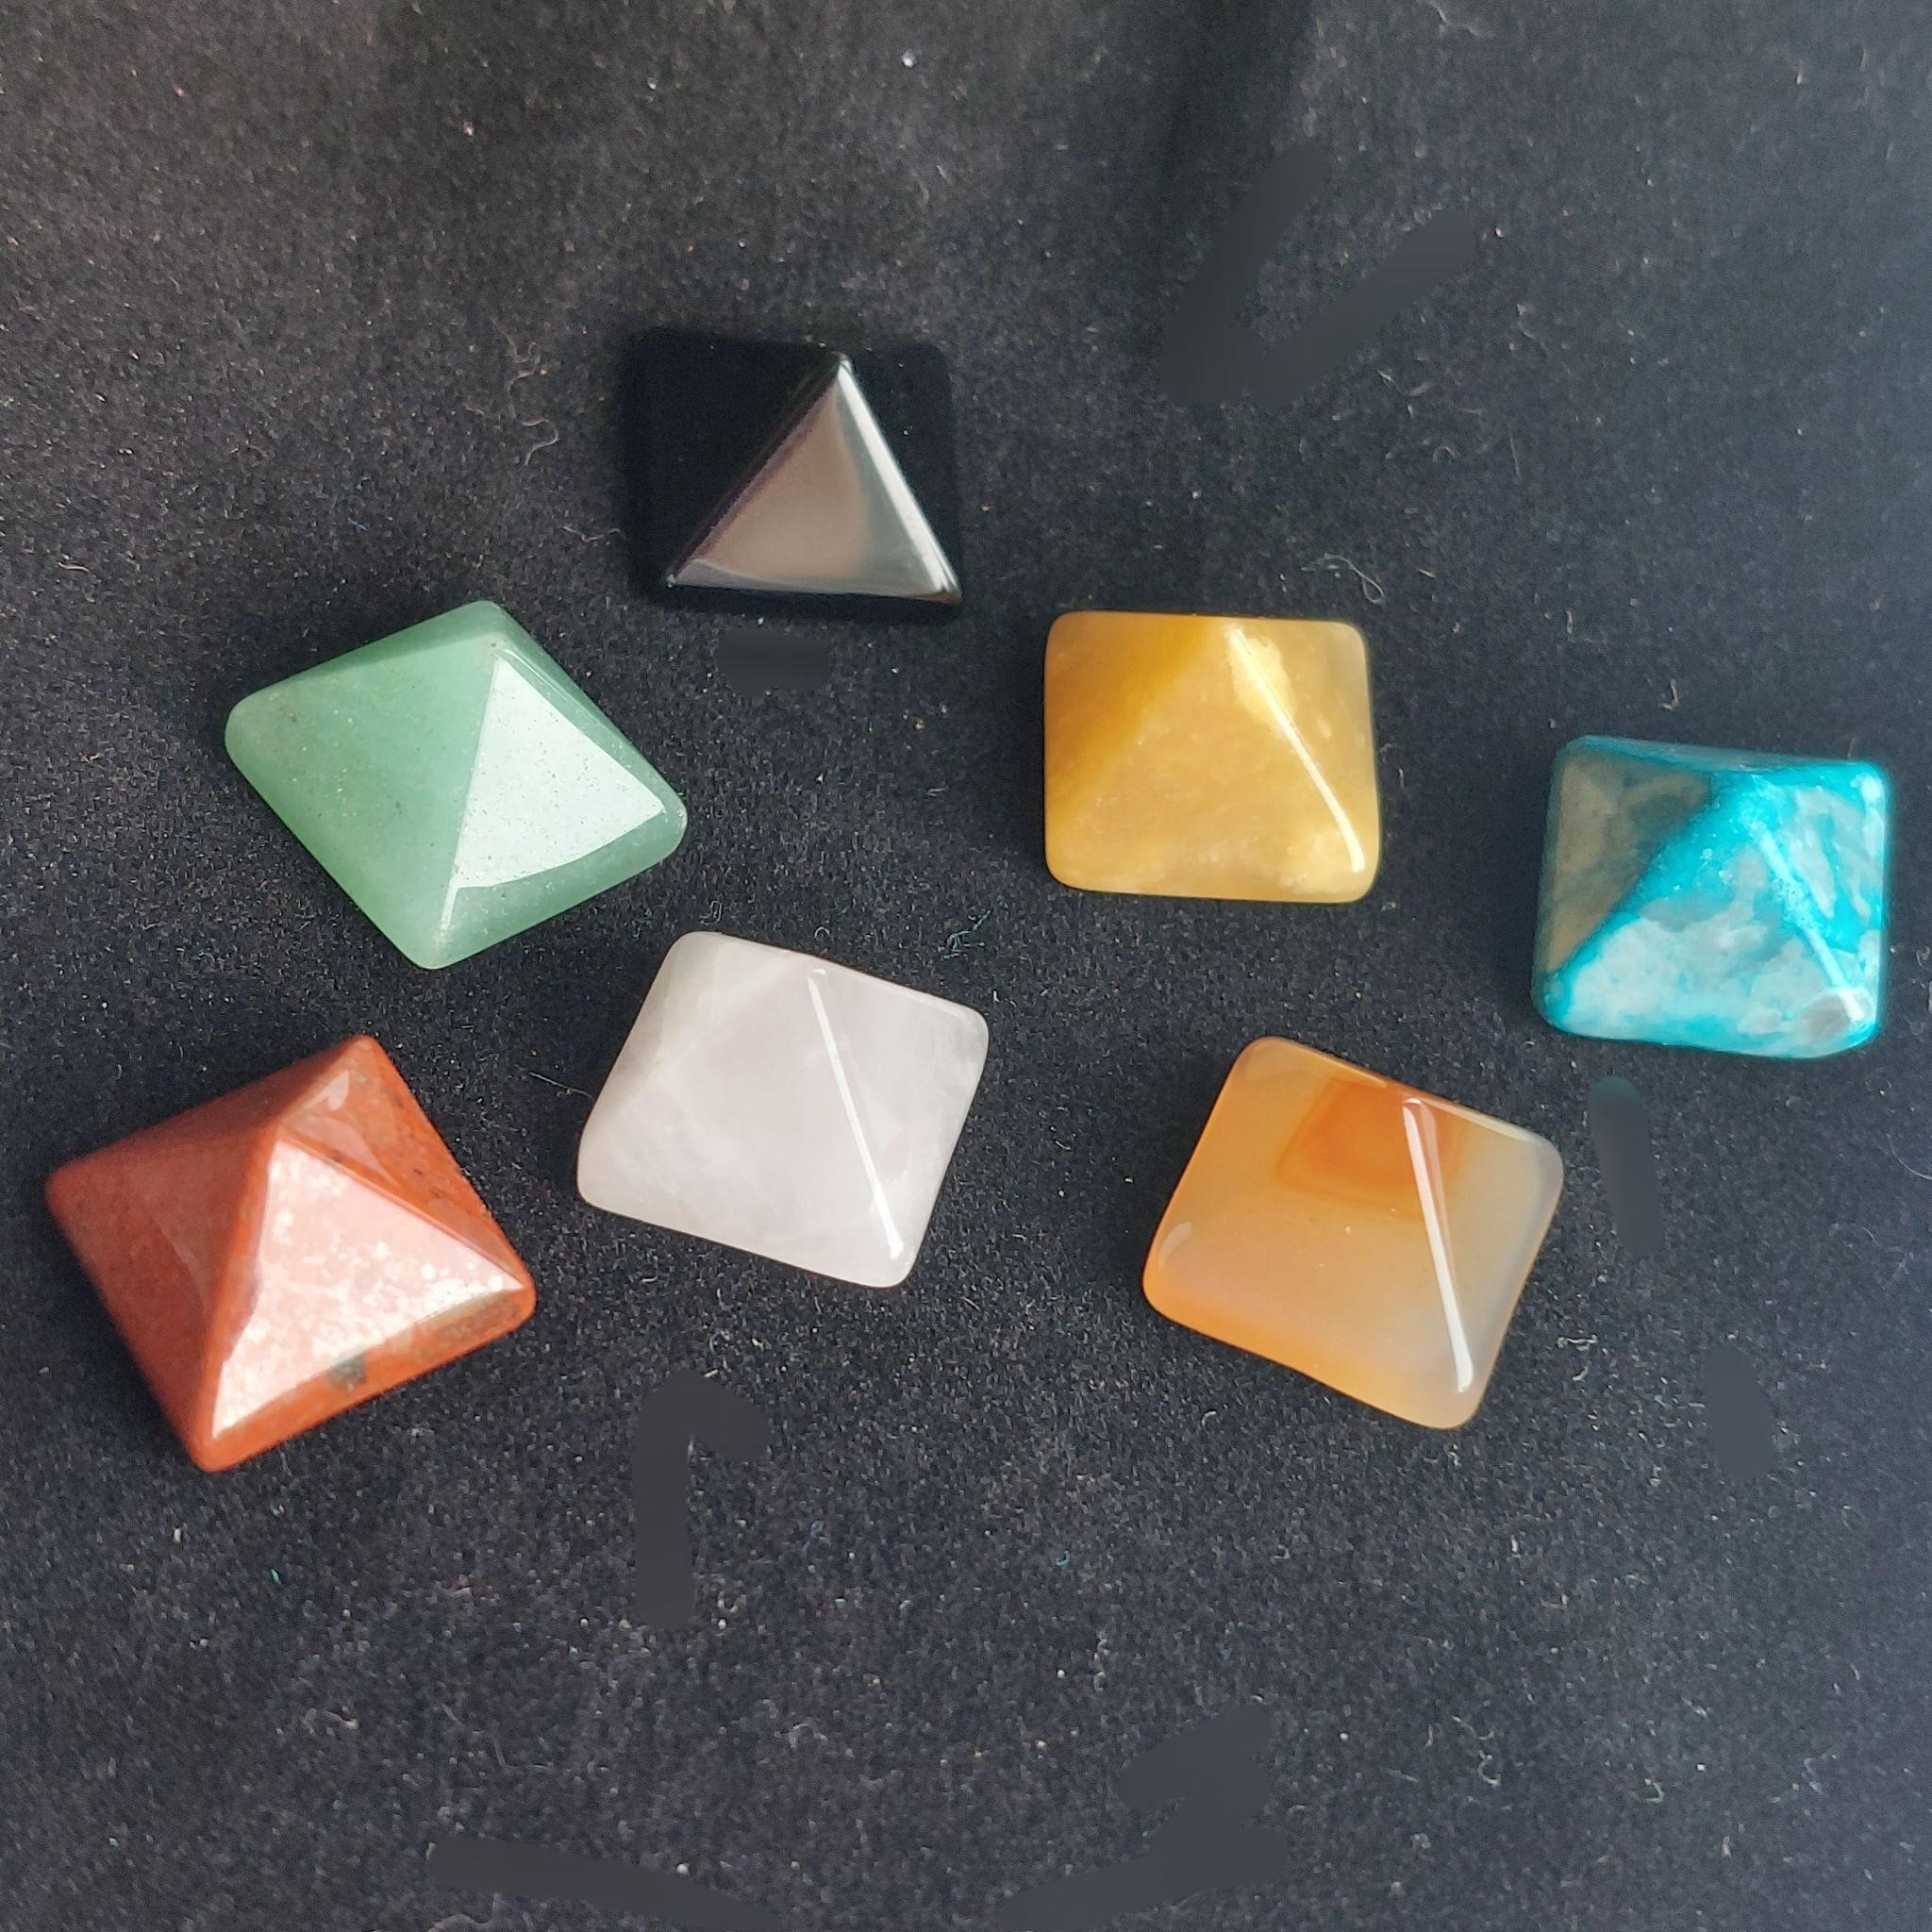 7-Piece Set - Chakra Pyramid Gemstones